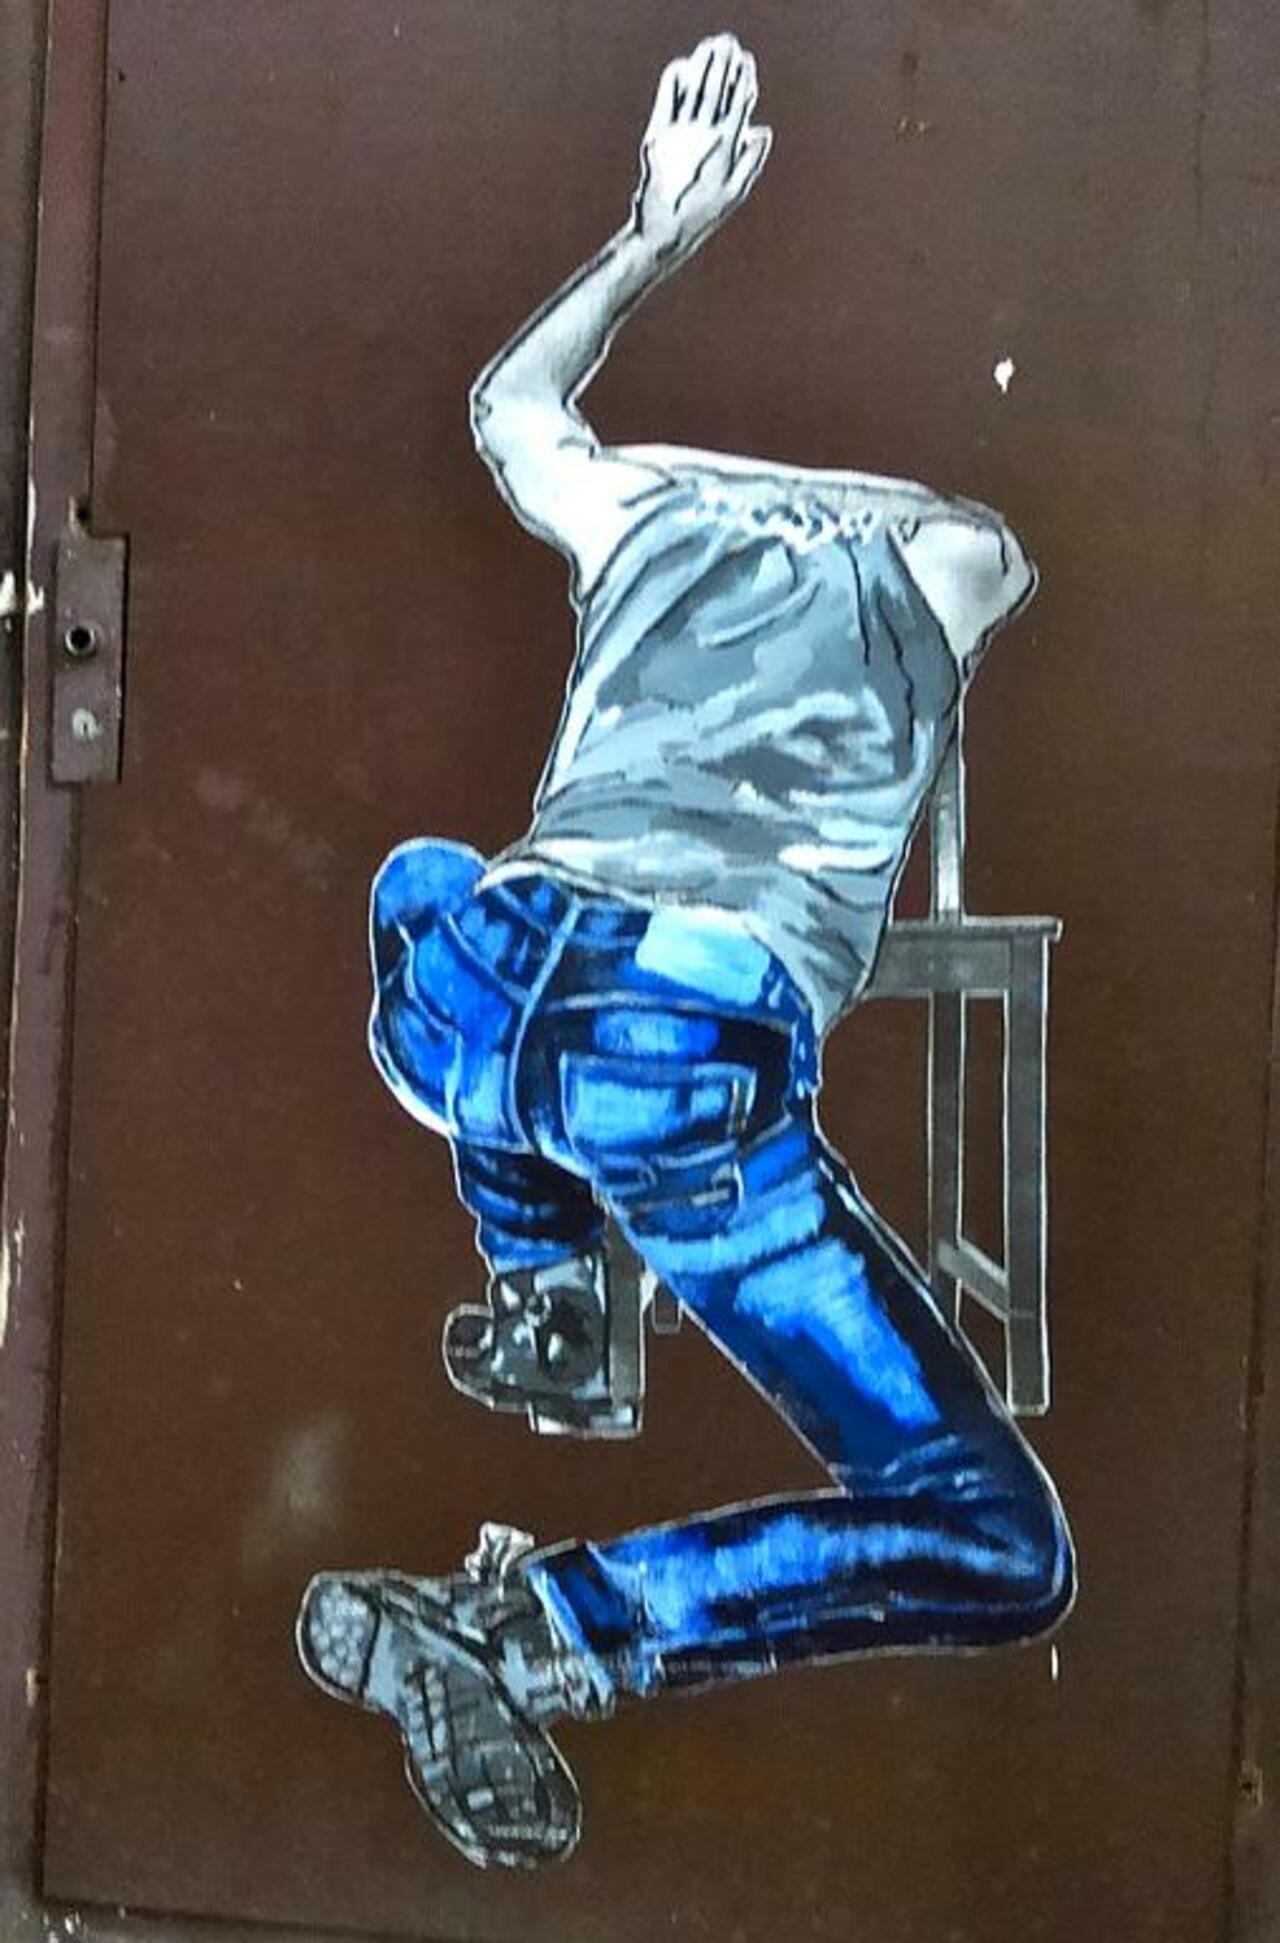 Street Art by anonymous in #Vitry-sur-Seine http://www.urbacolors.com #art #mural #graffiti #streetart https://t.co/tvTBHQvQx5